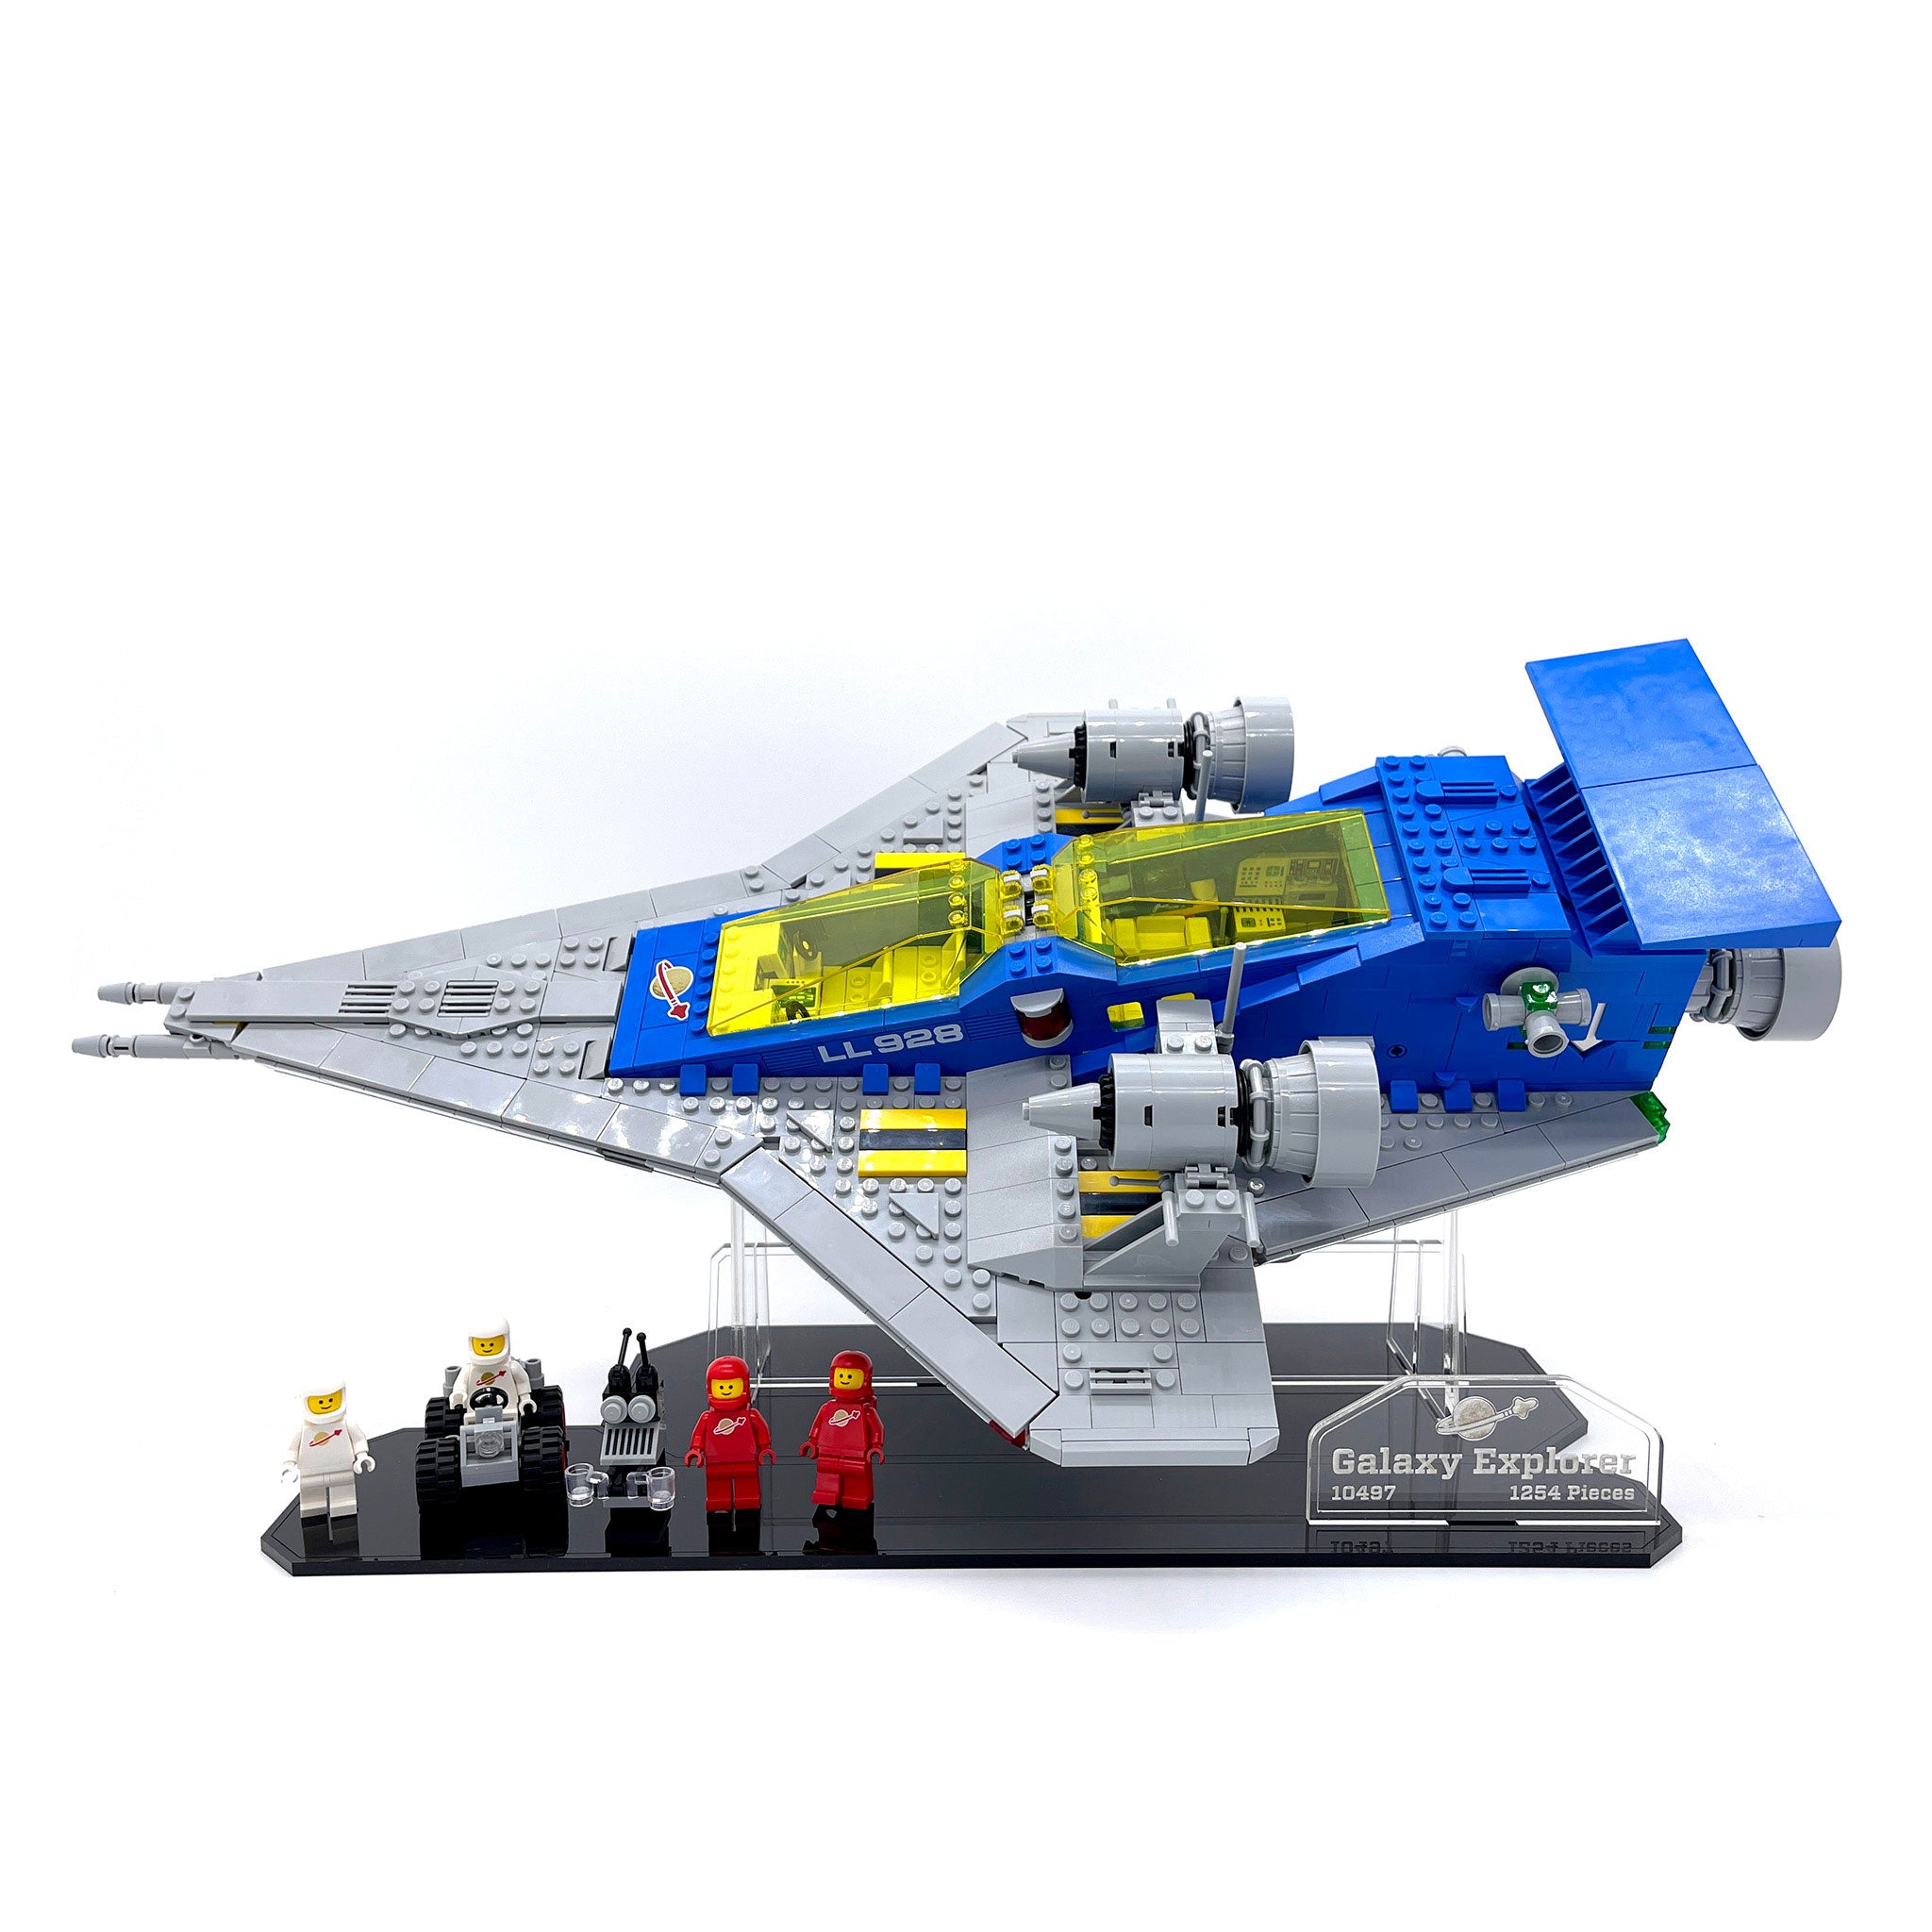 Galaxy Explorer 10497, LEGO® Icons